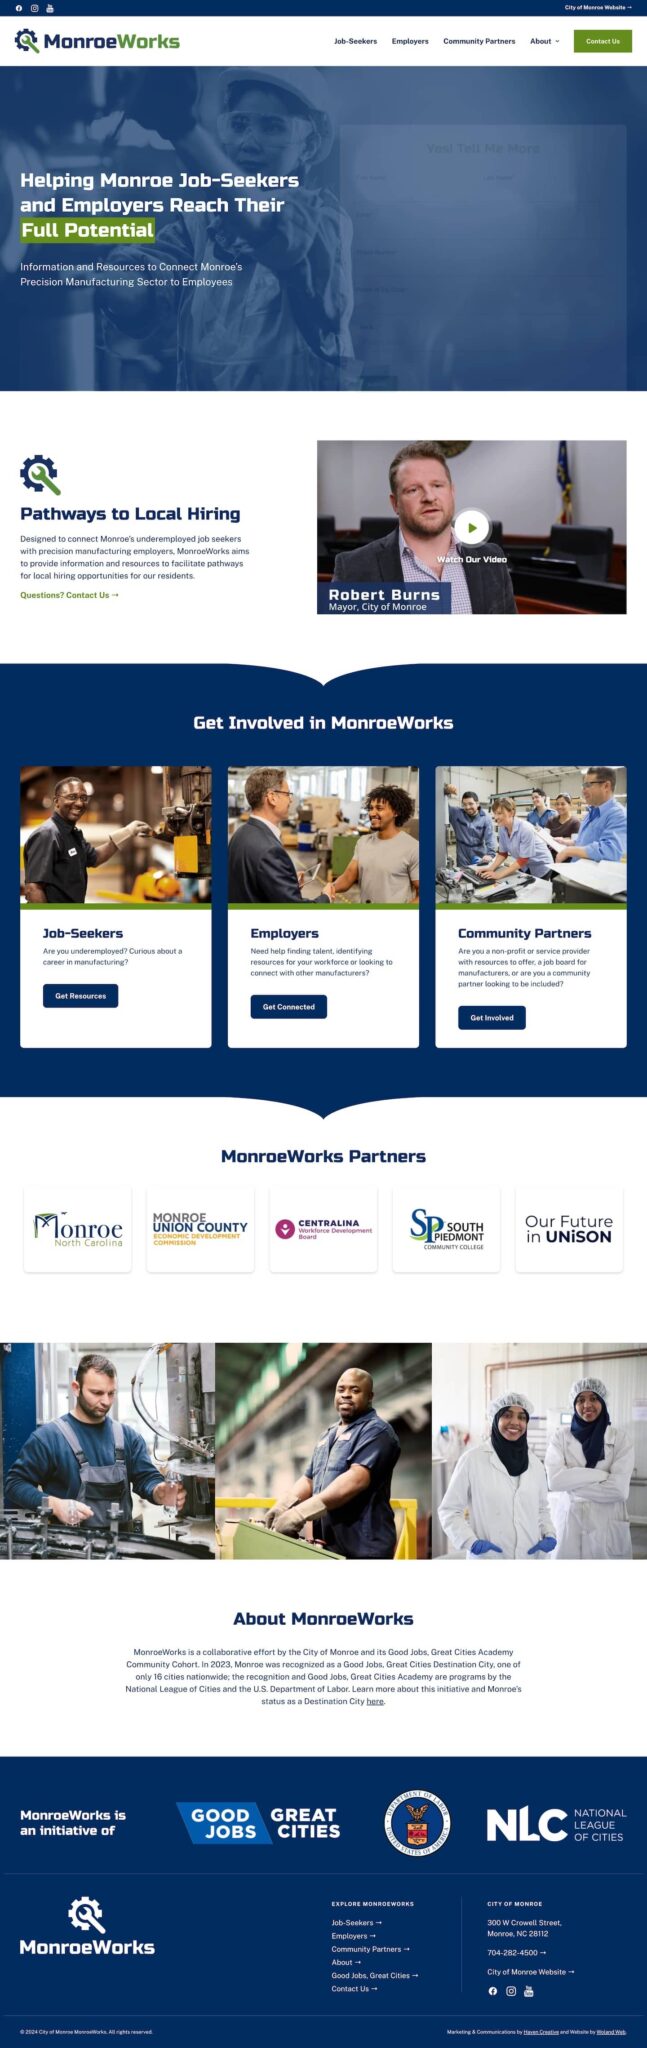 MonroeWorks website home page